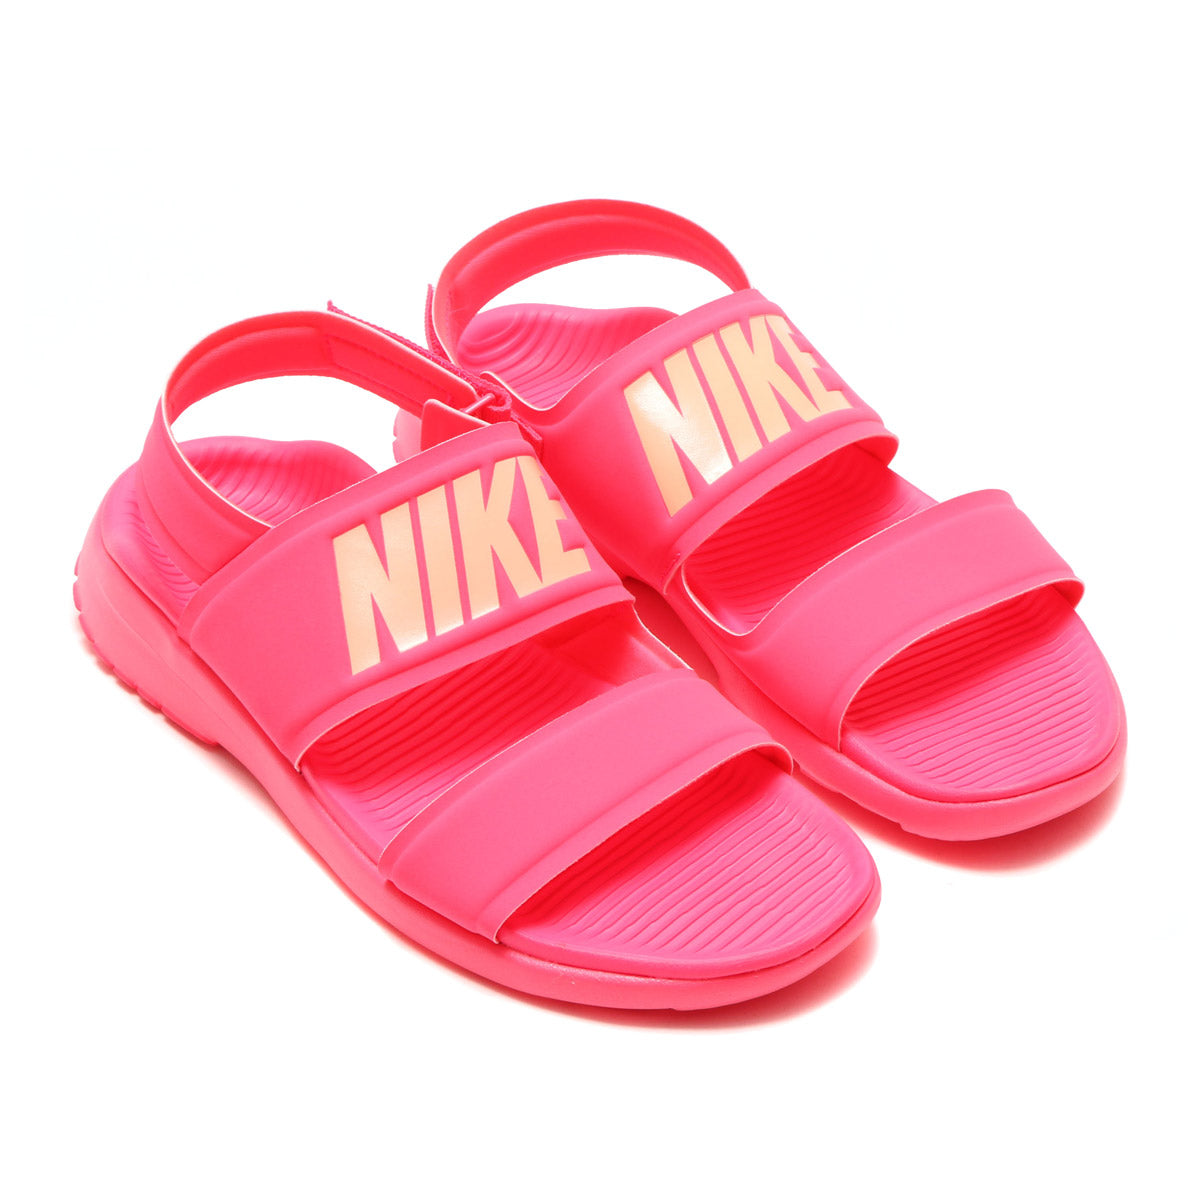 tanjun sandals pink